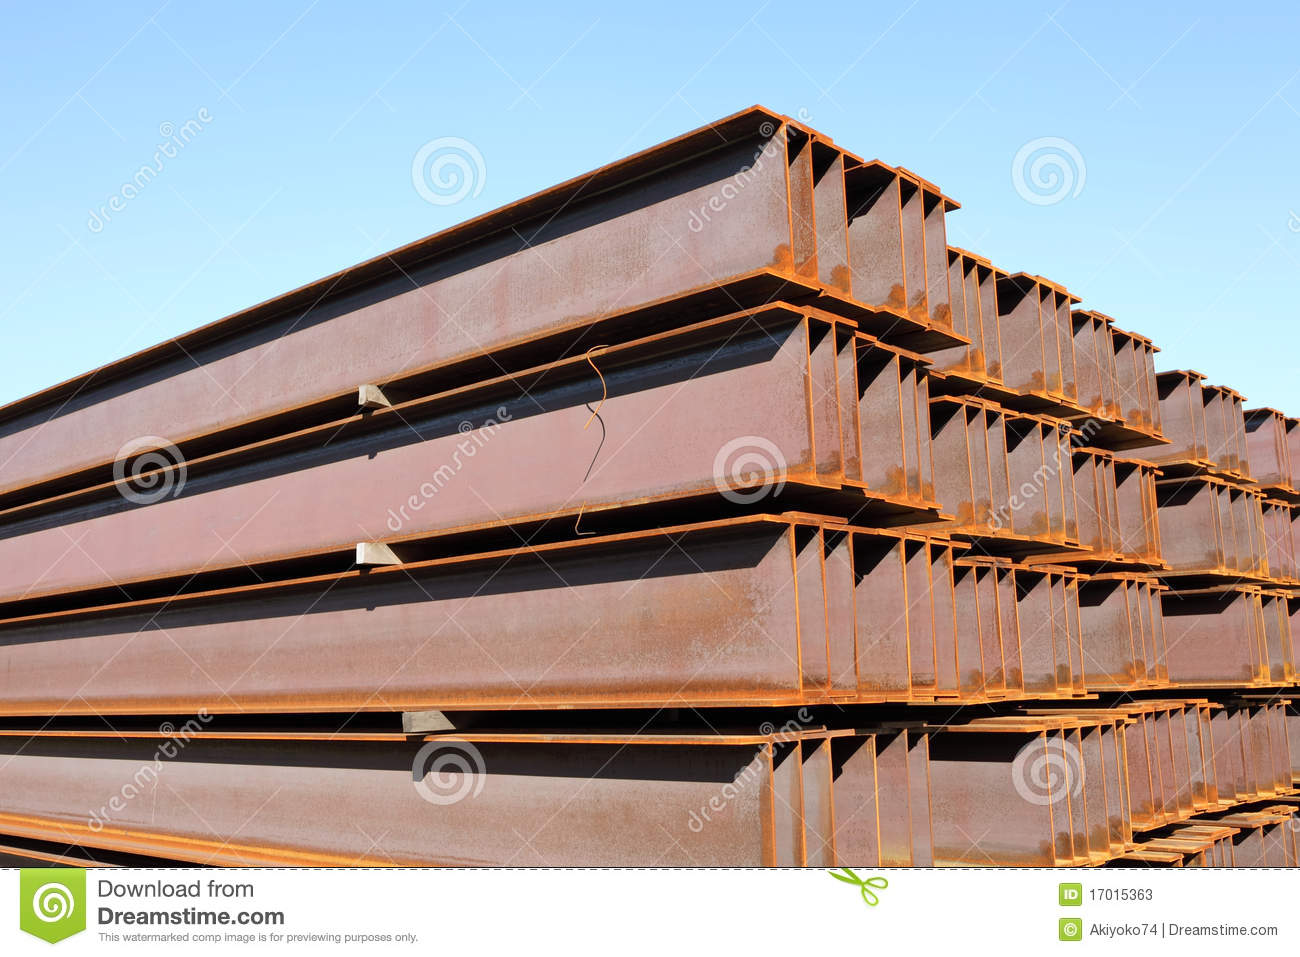 Building Materials Stock Photos   Image  17015363